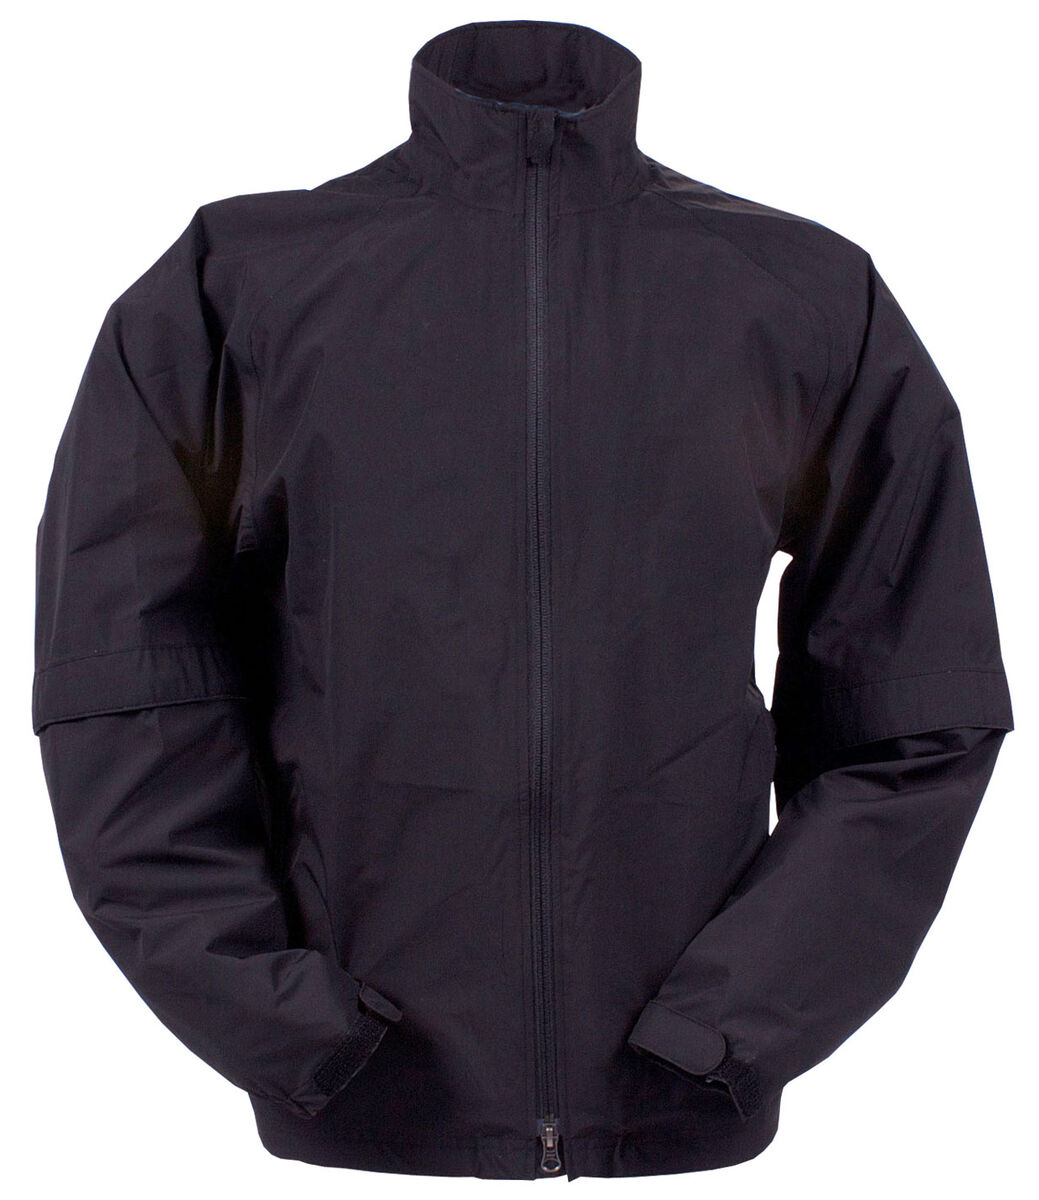 Restriction Packable Rain Proof Jacket by Zero: Find Zero Men's Golf ...